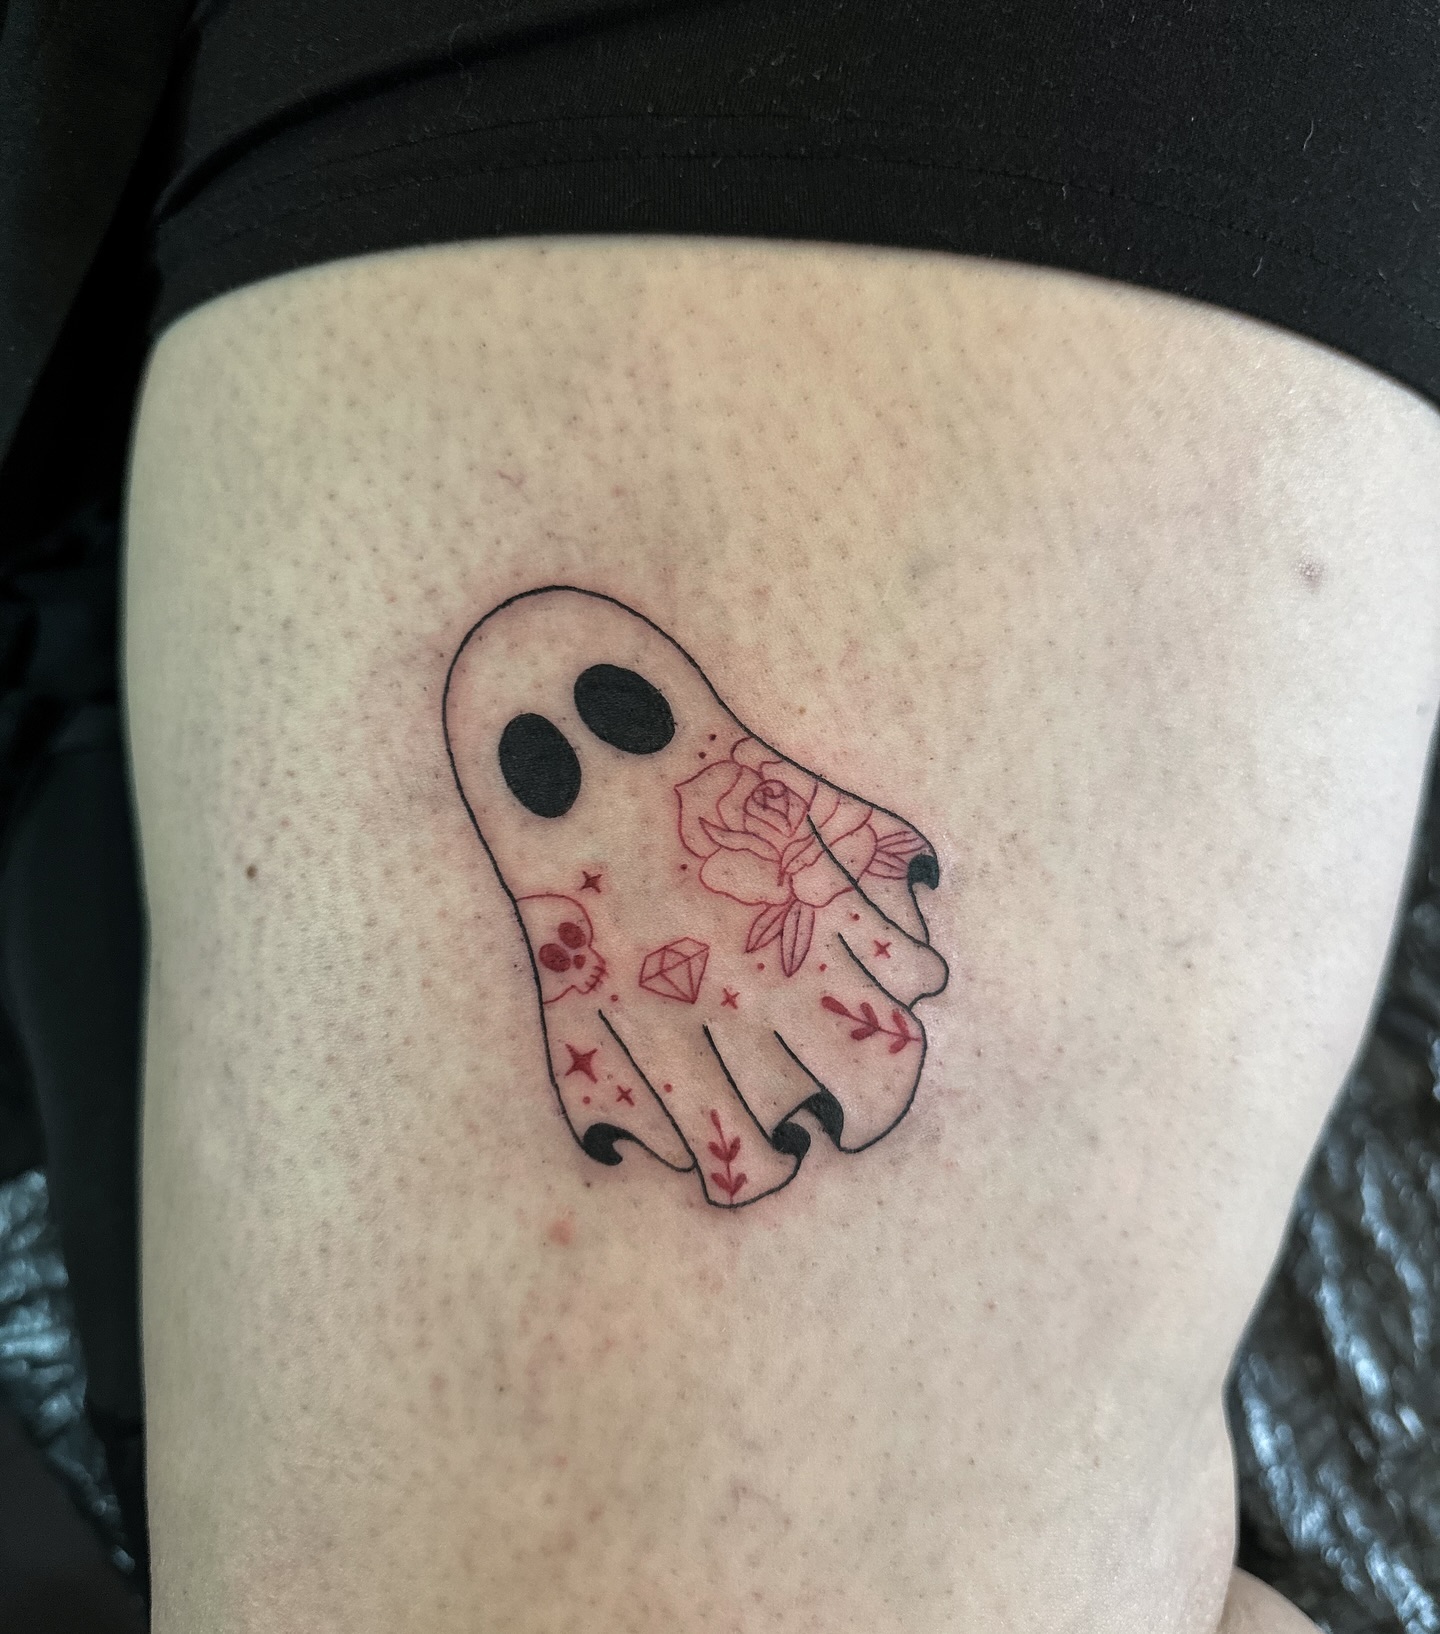 DANKE NATALIE!
.
#ghosttattoo #ghost #spookytattoo #tattooideas #tattoo #tattooe